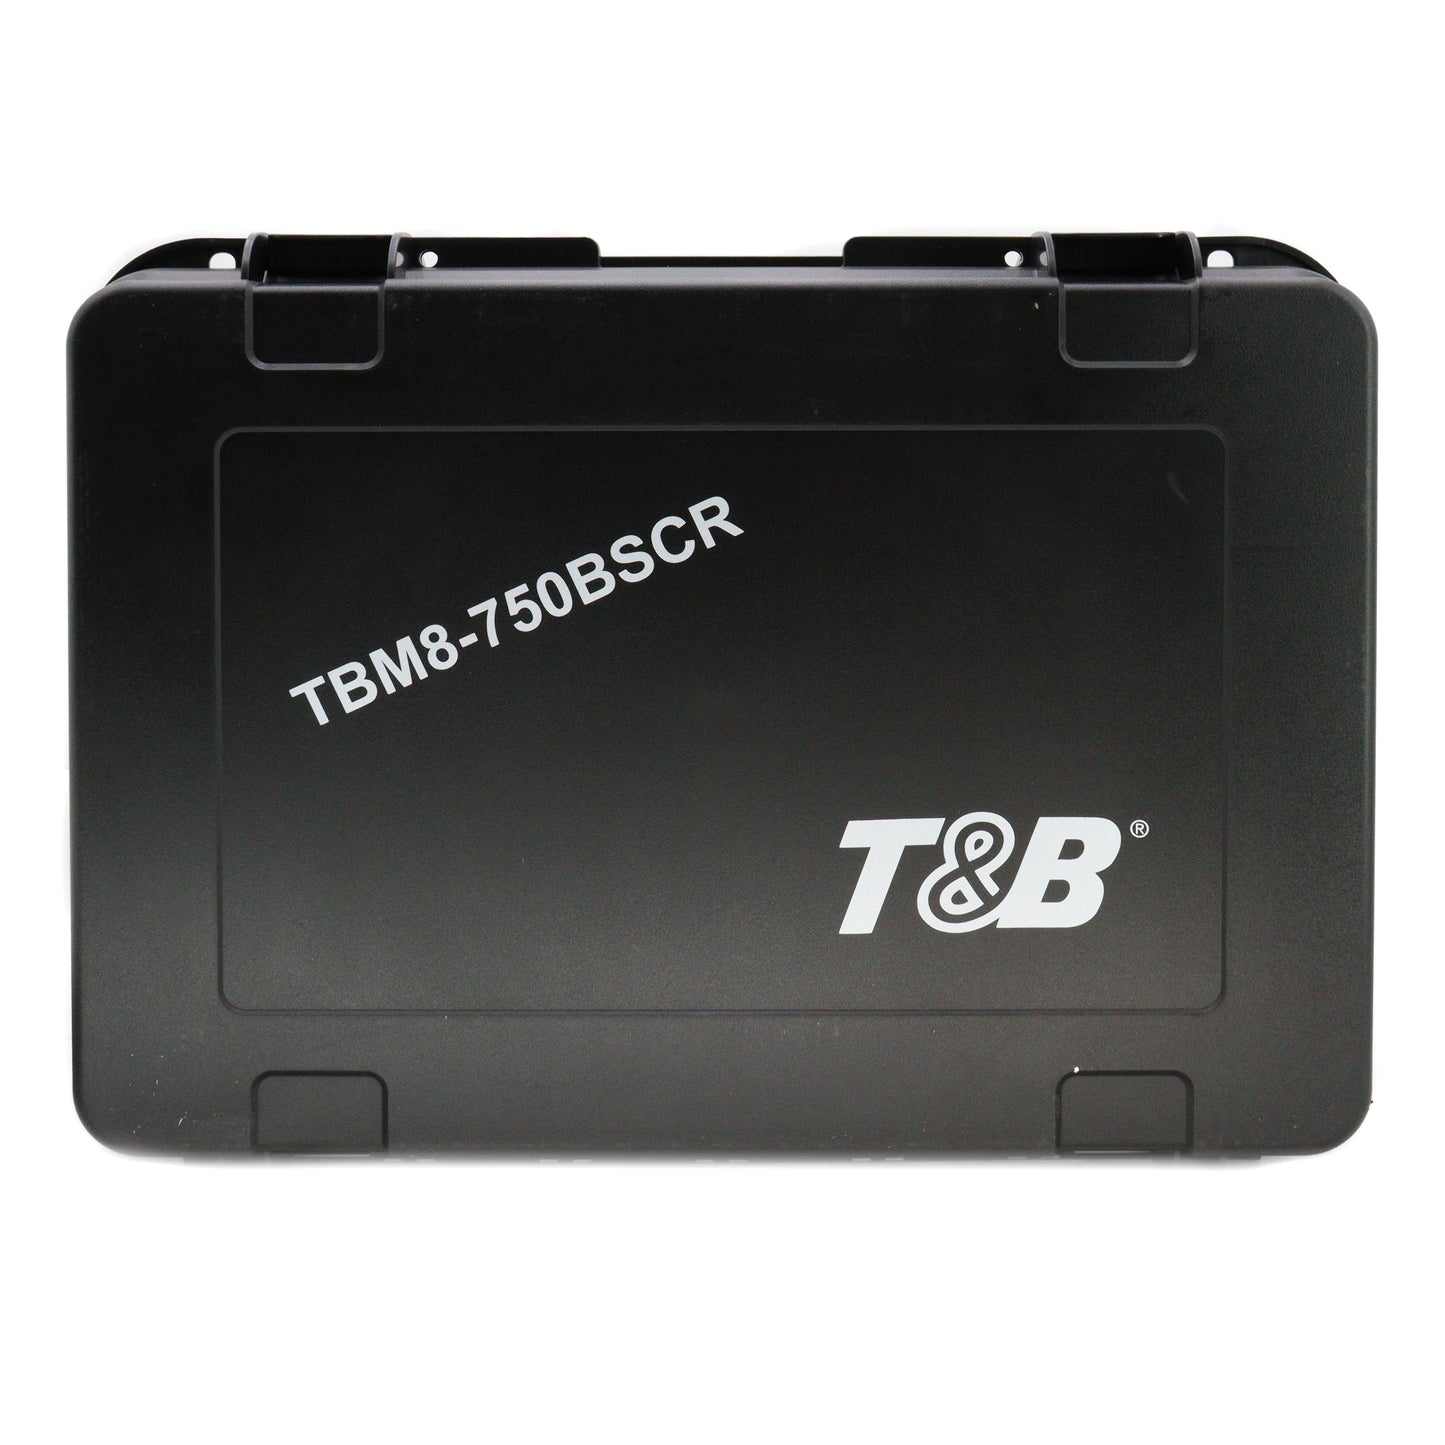 Thomas & Betts TBM8-750BSCR